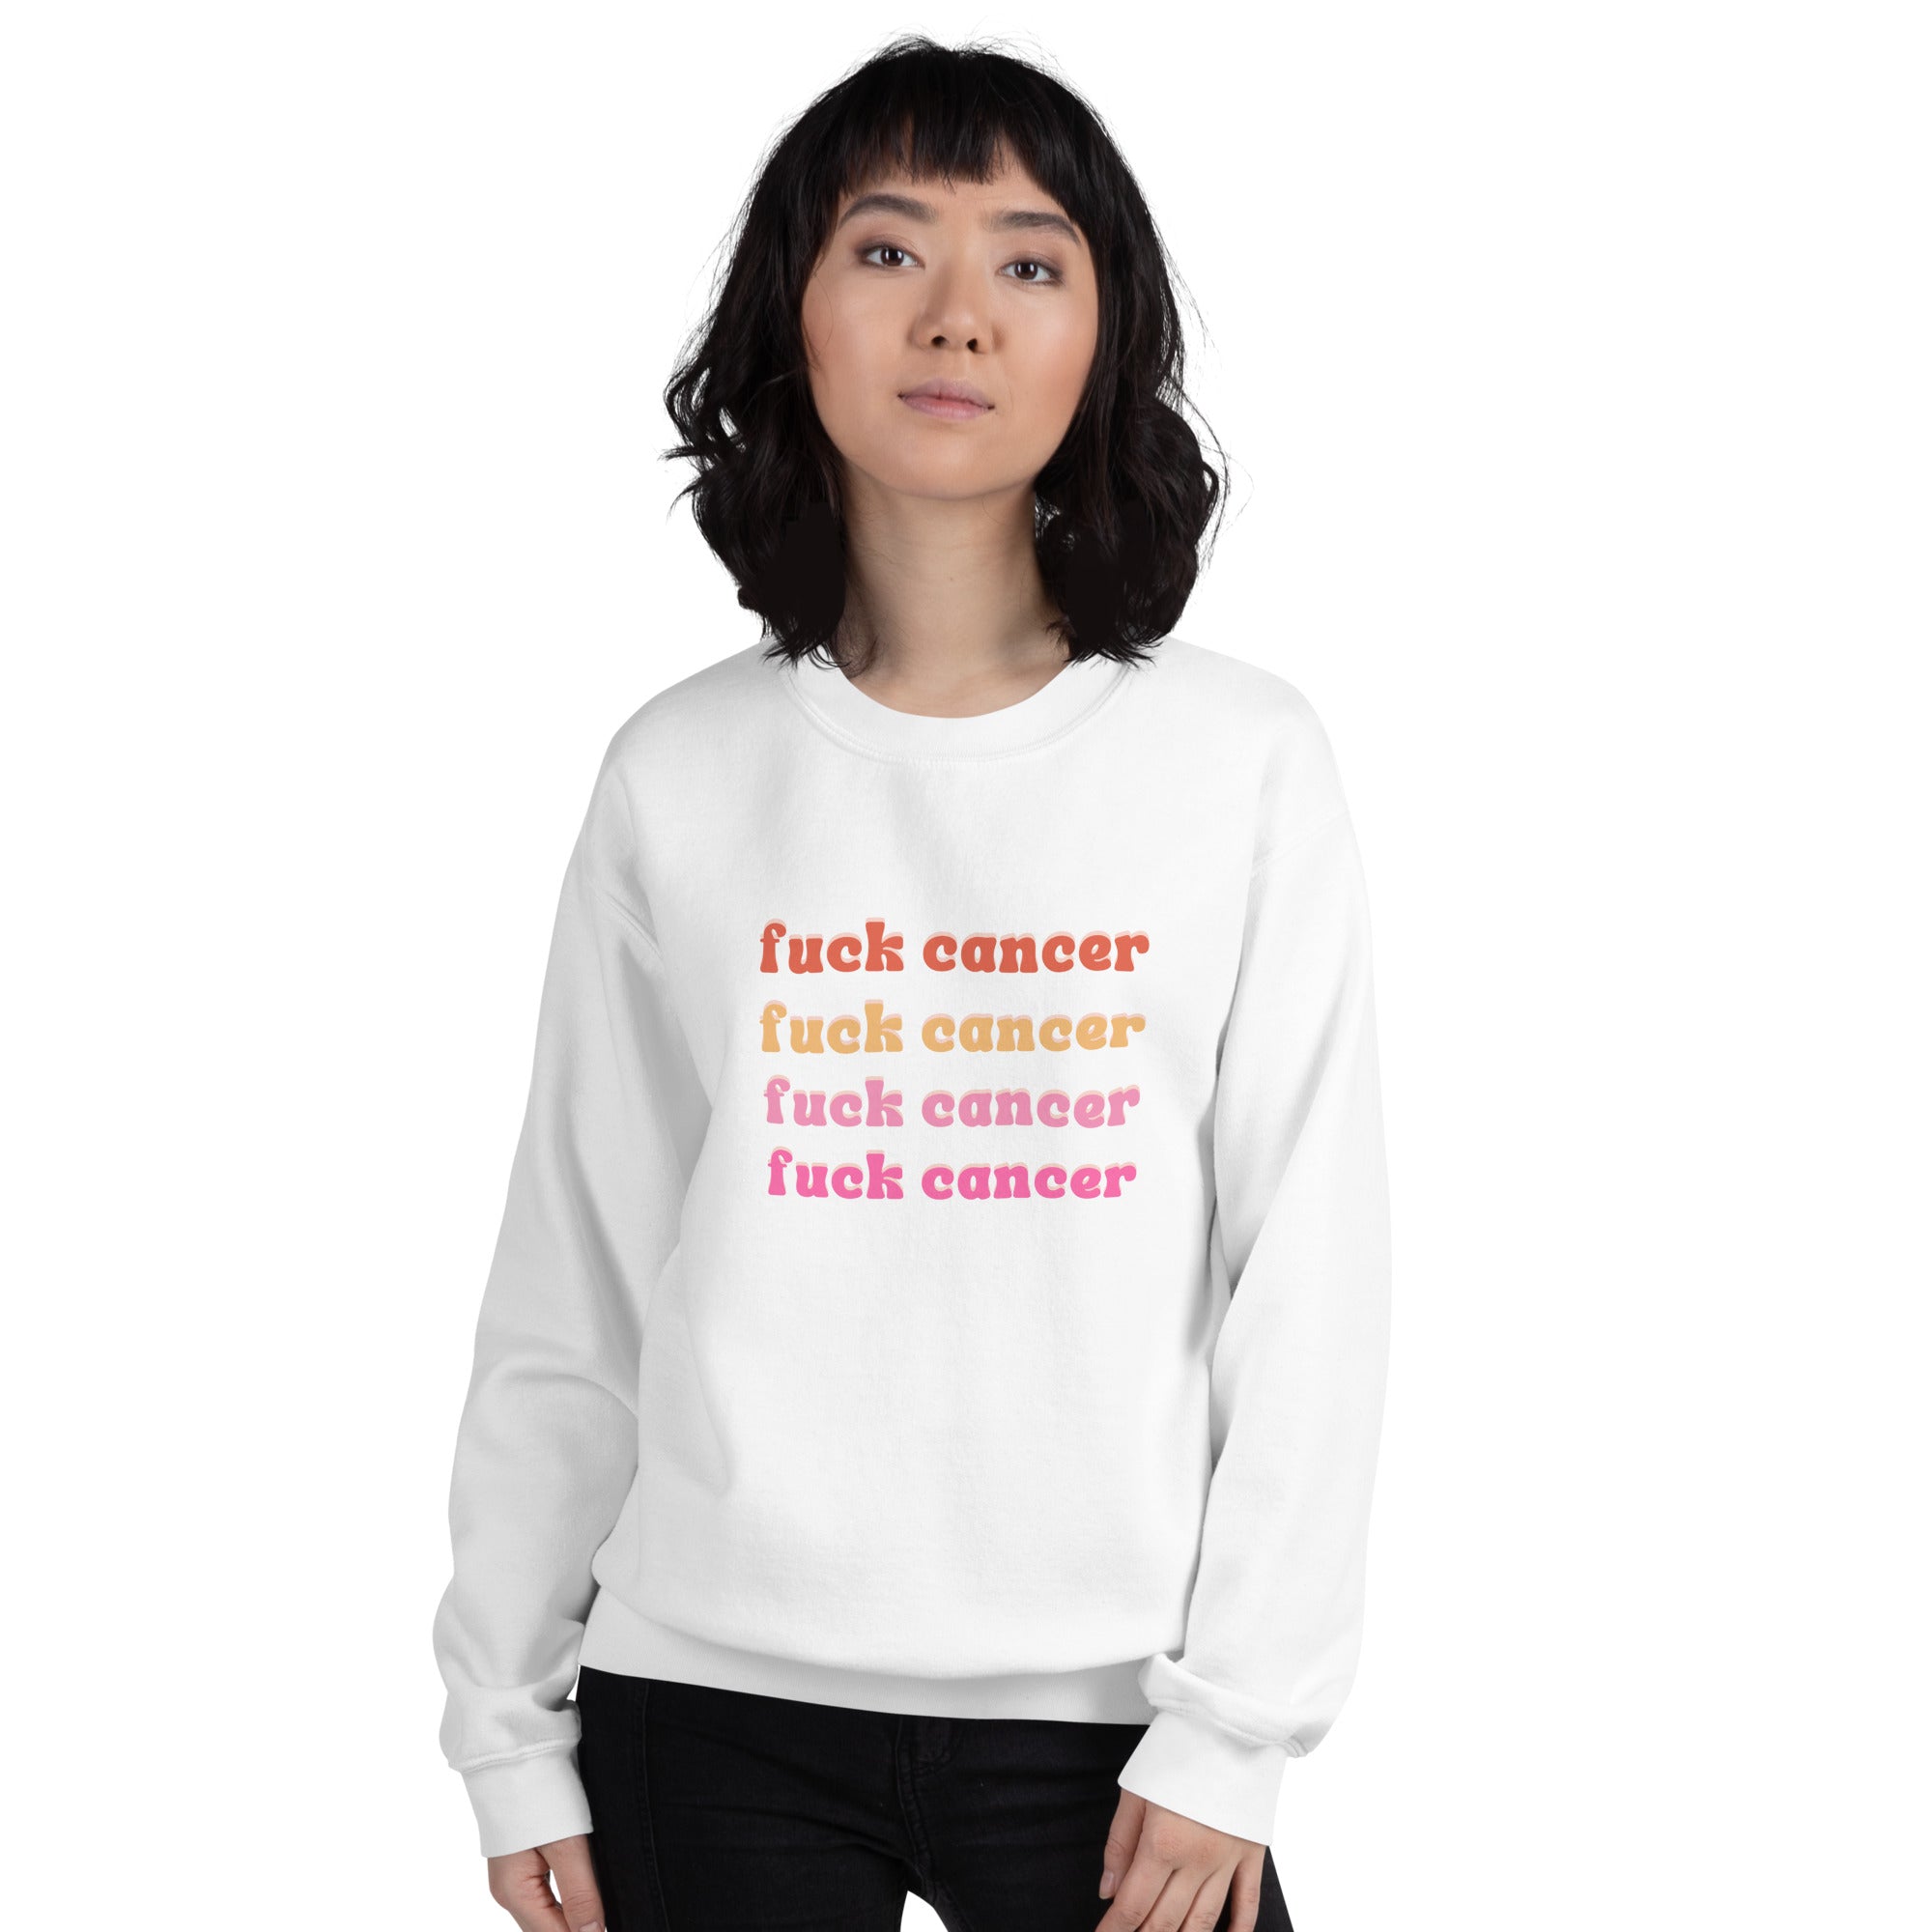 Fuck Cancer Sweatshirt